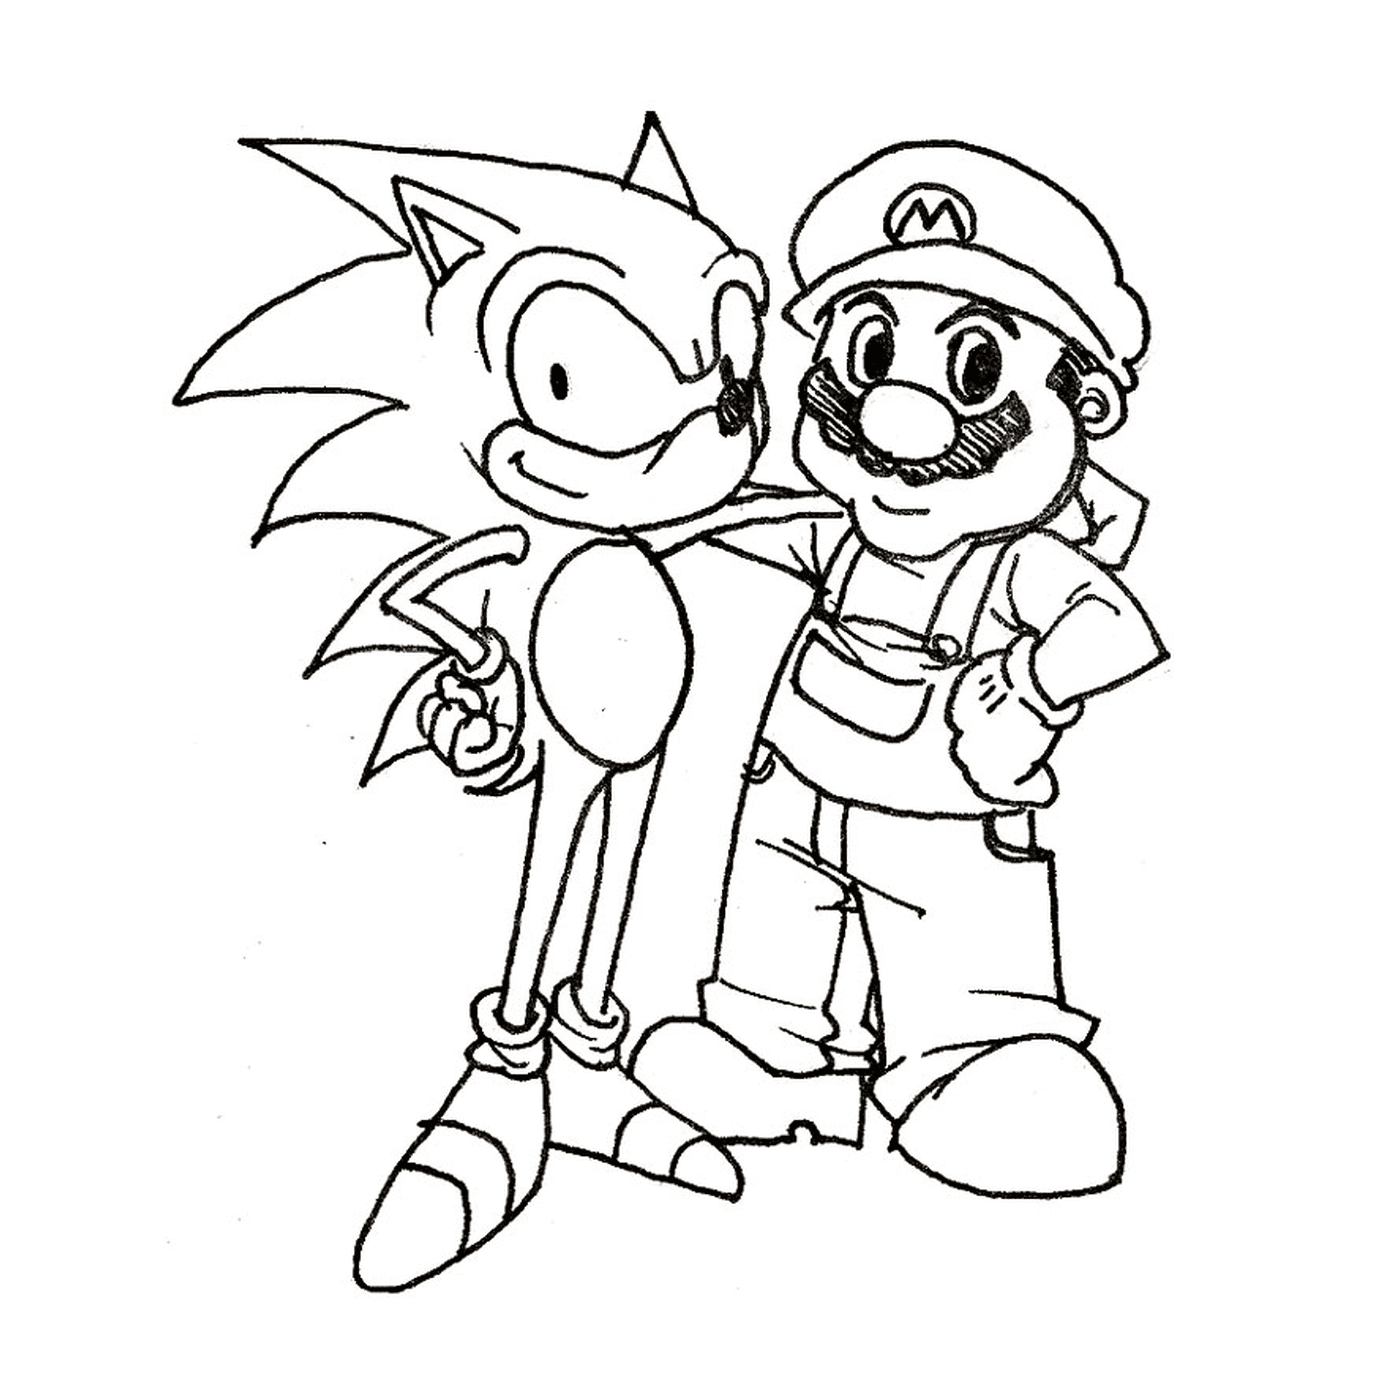   Mario et Sonic ensemble 